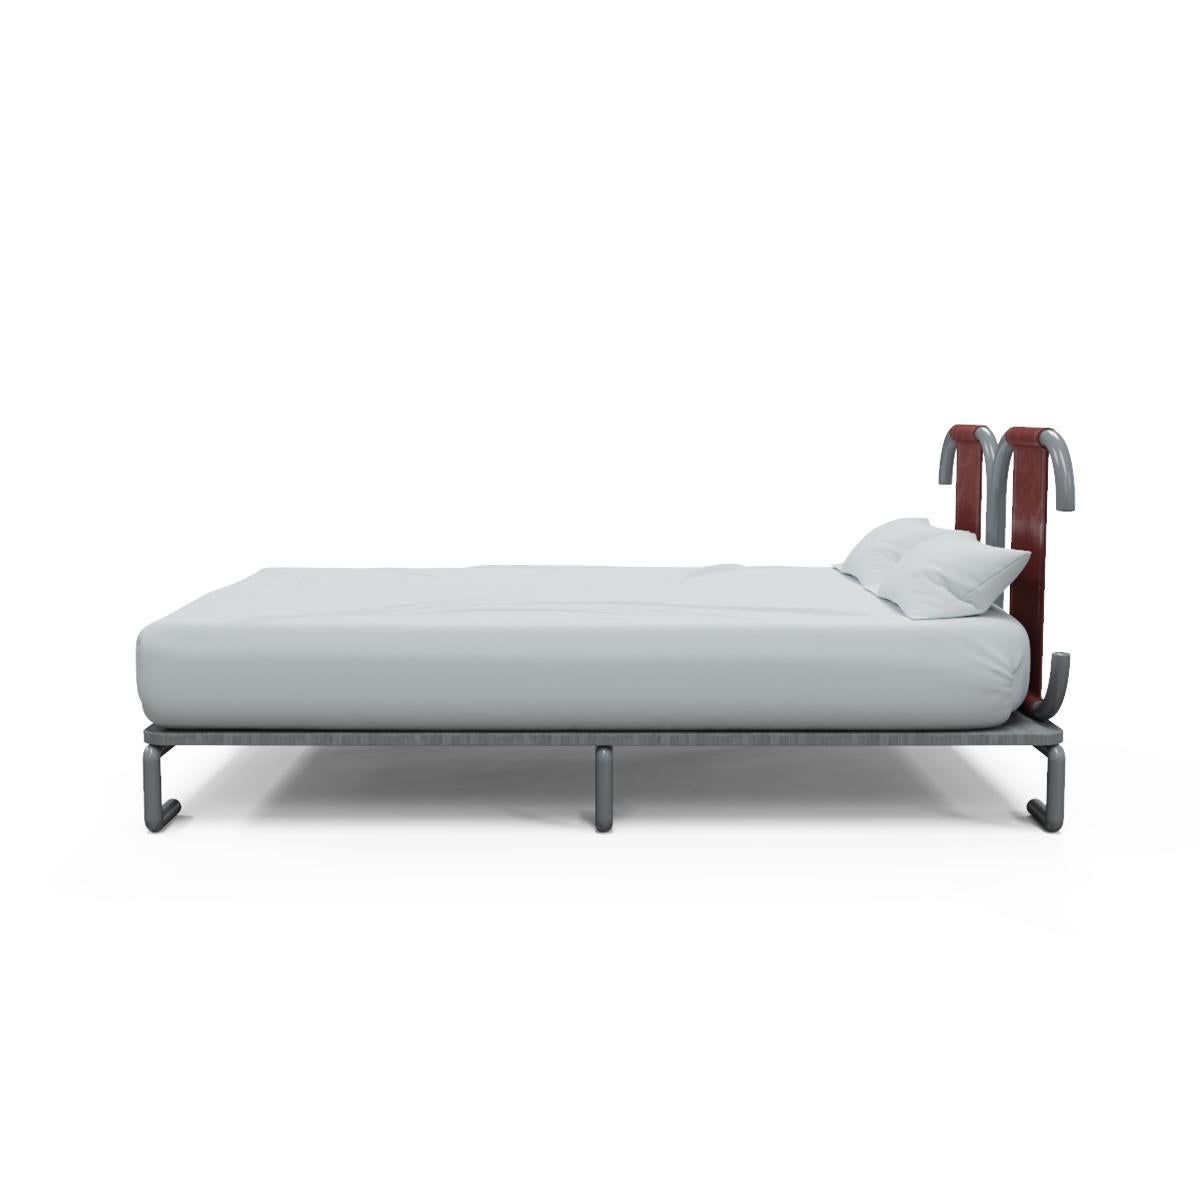 minimalist queen bed frame